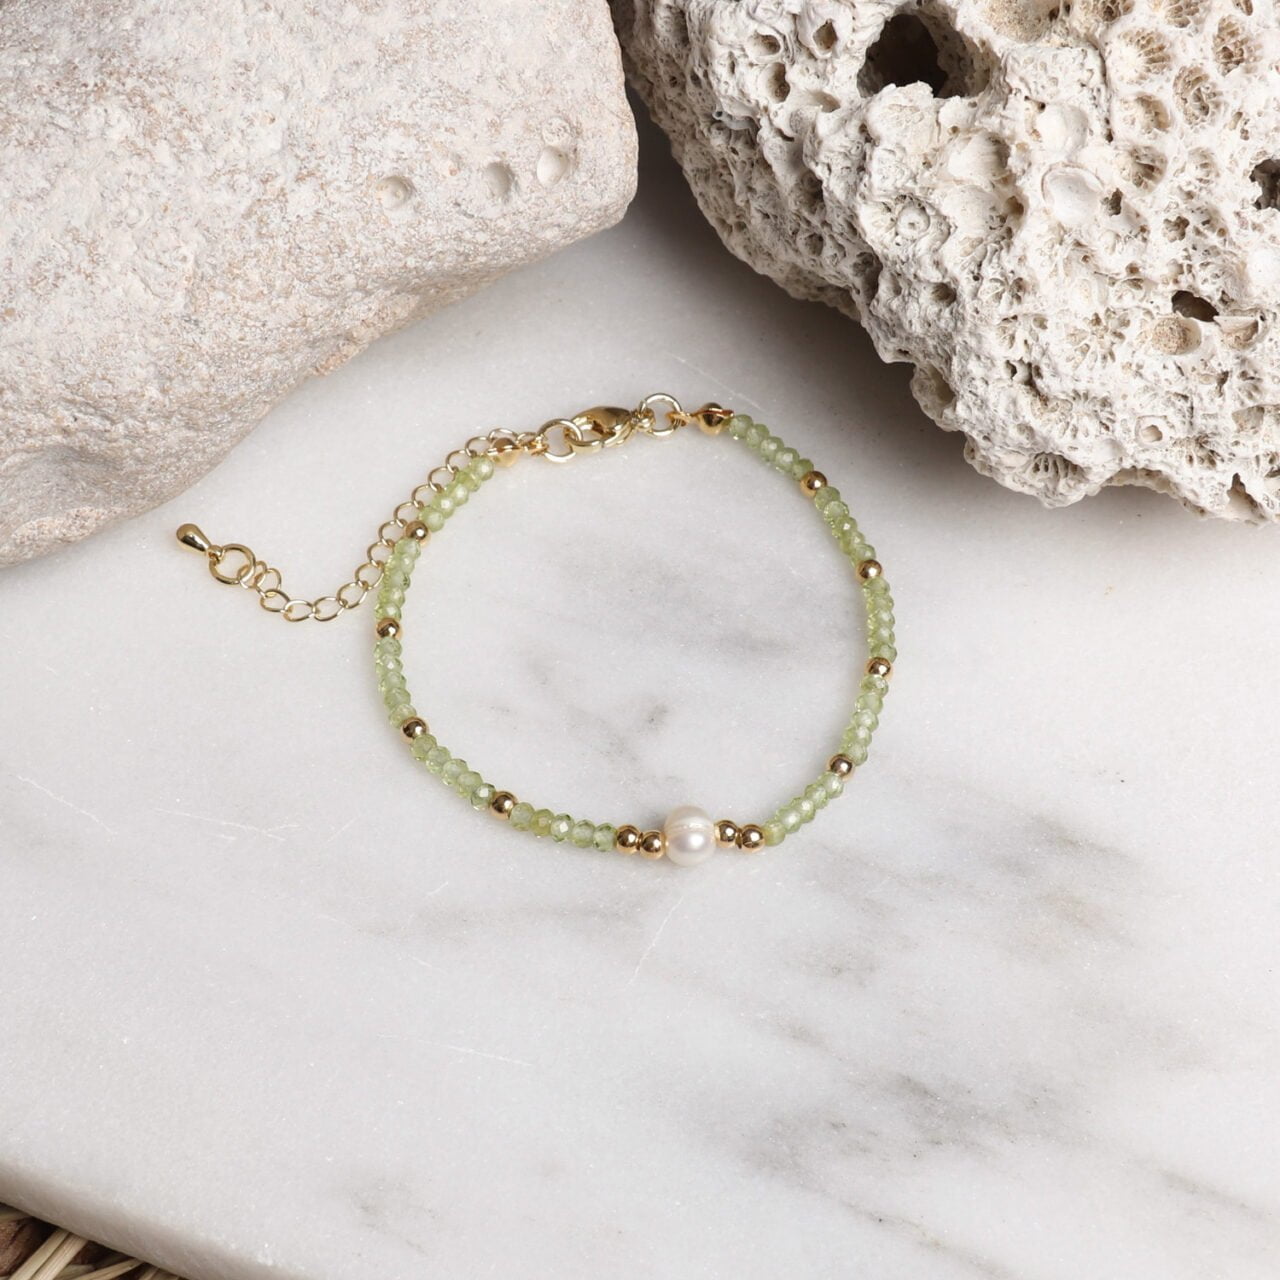 Fabulous Gifts Jewellery Bracelet Stone Bead Apple Green by Weirs of Baggot Street